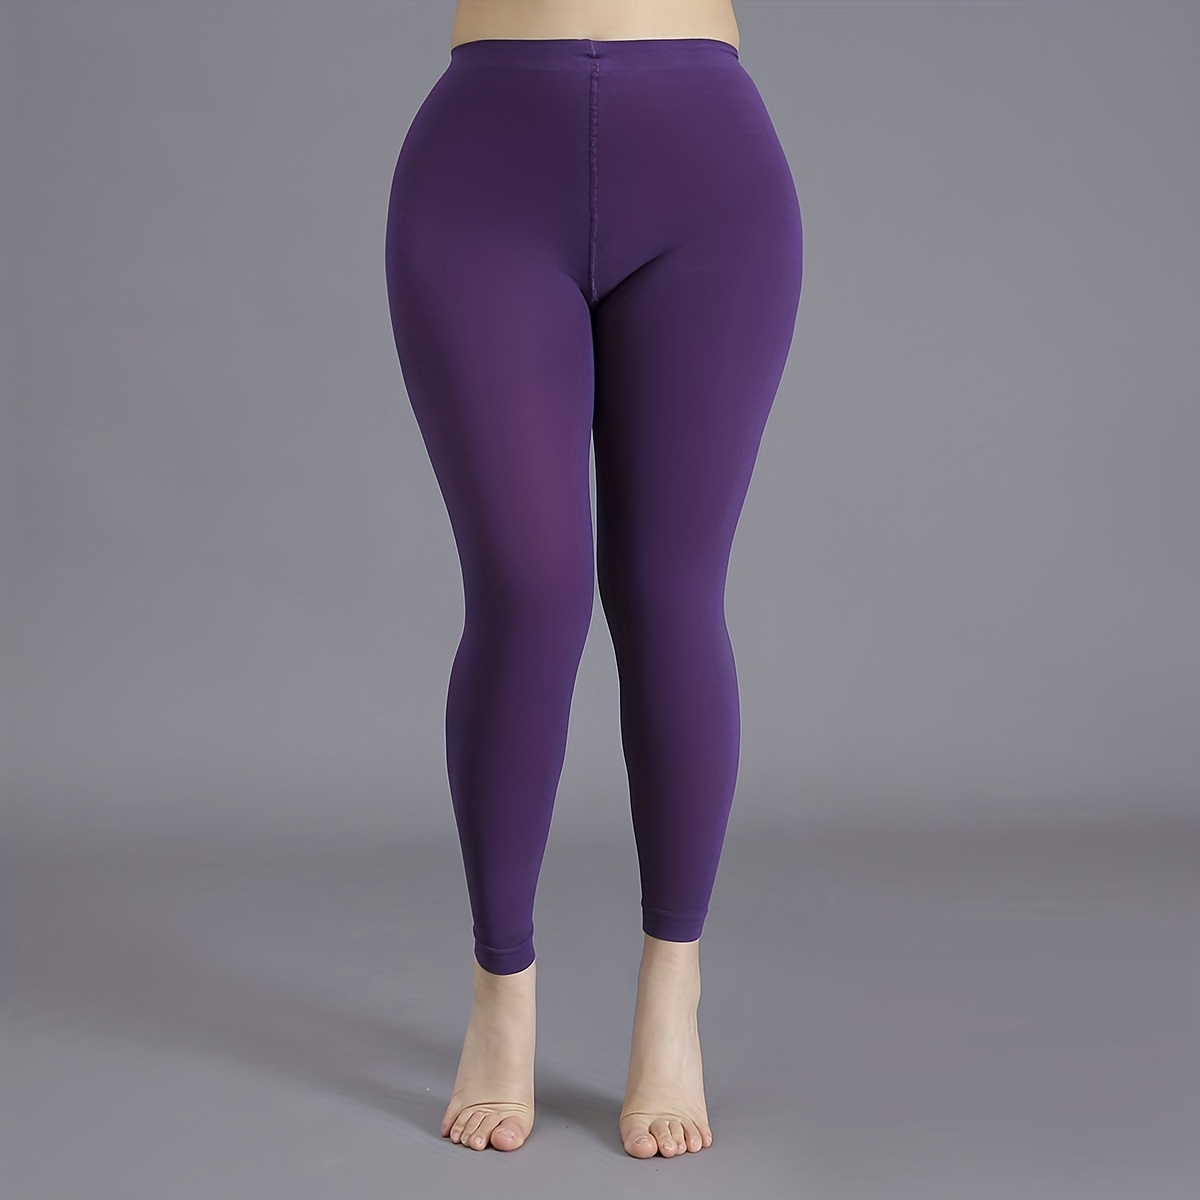 Plus Size Tights Dark Purple for Women